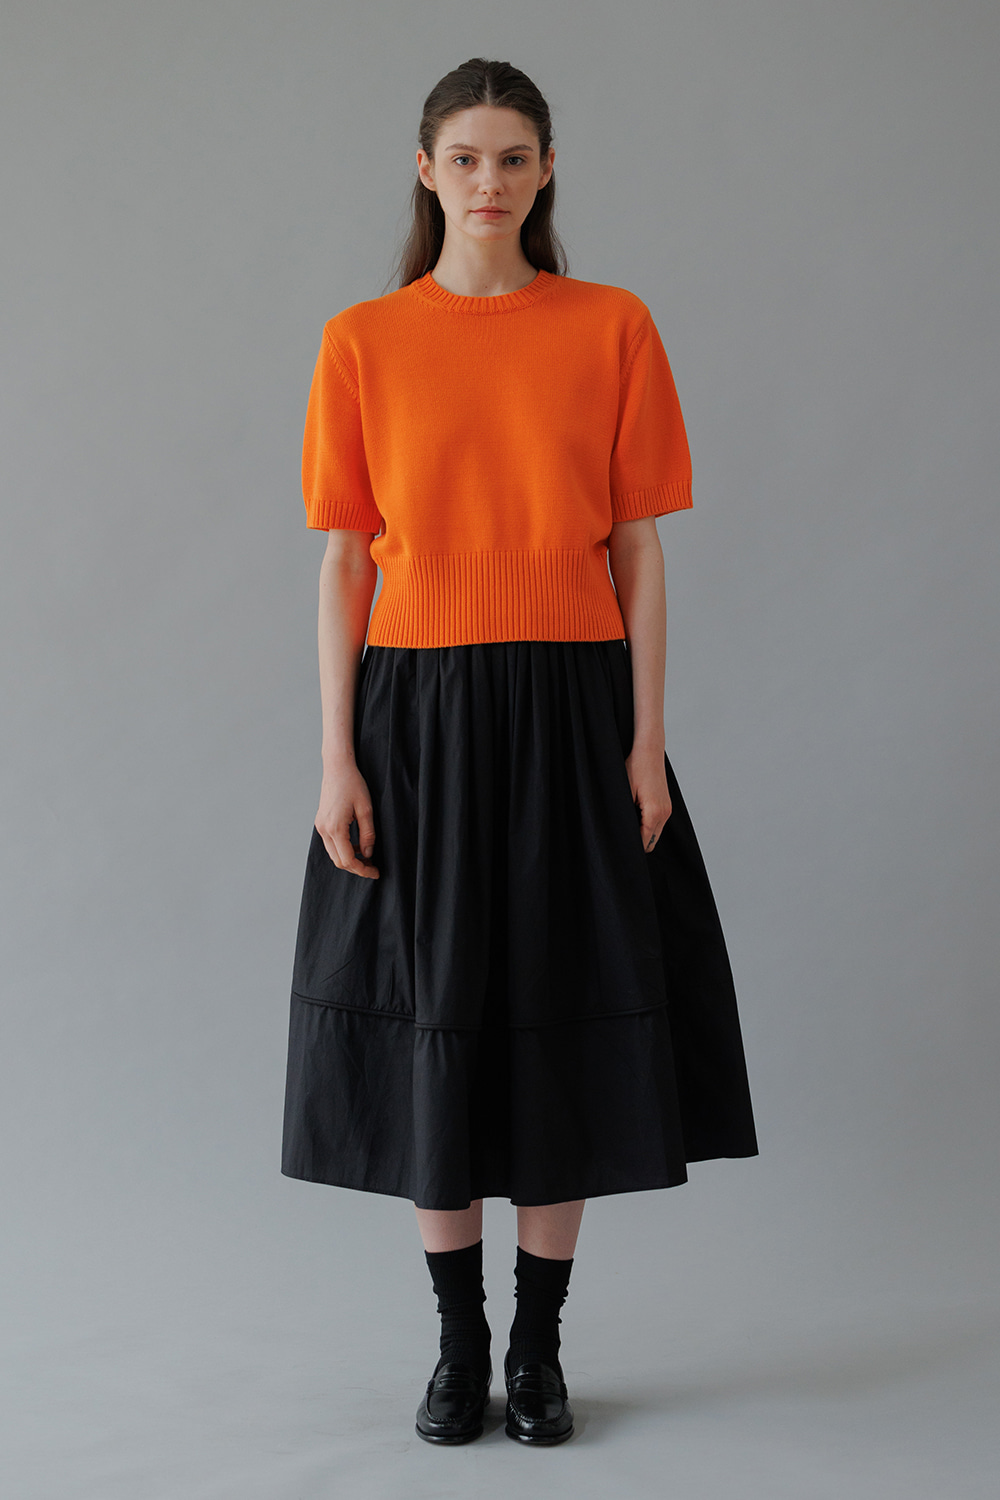 Lulu Cotton Knit(Orange)